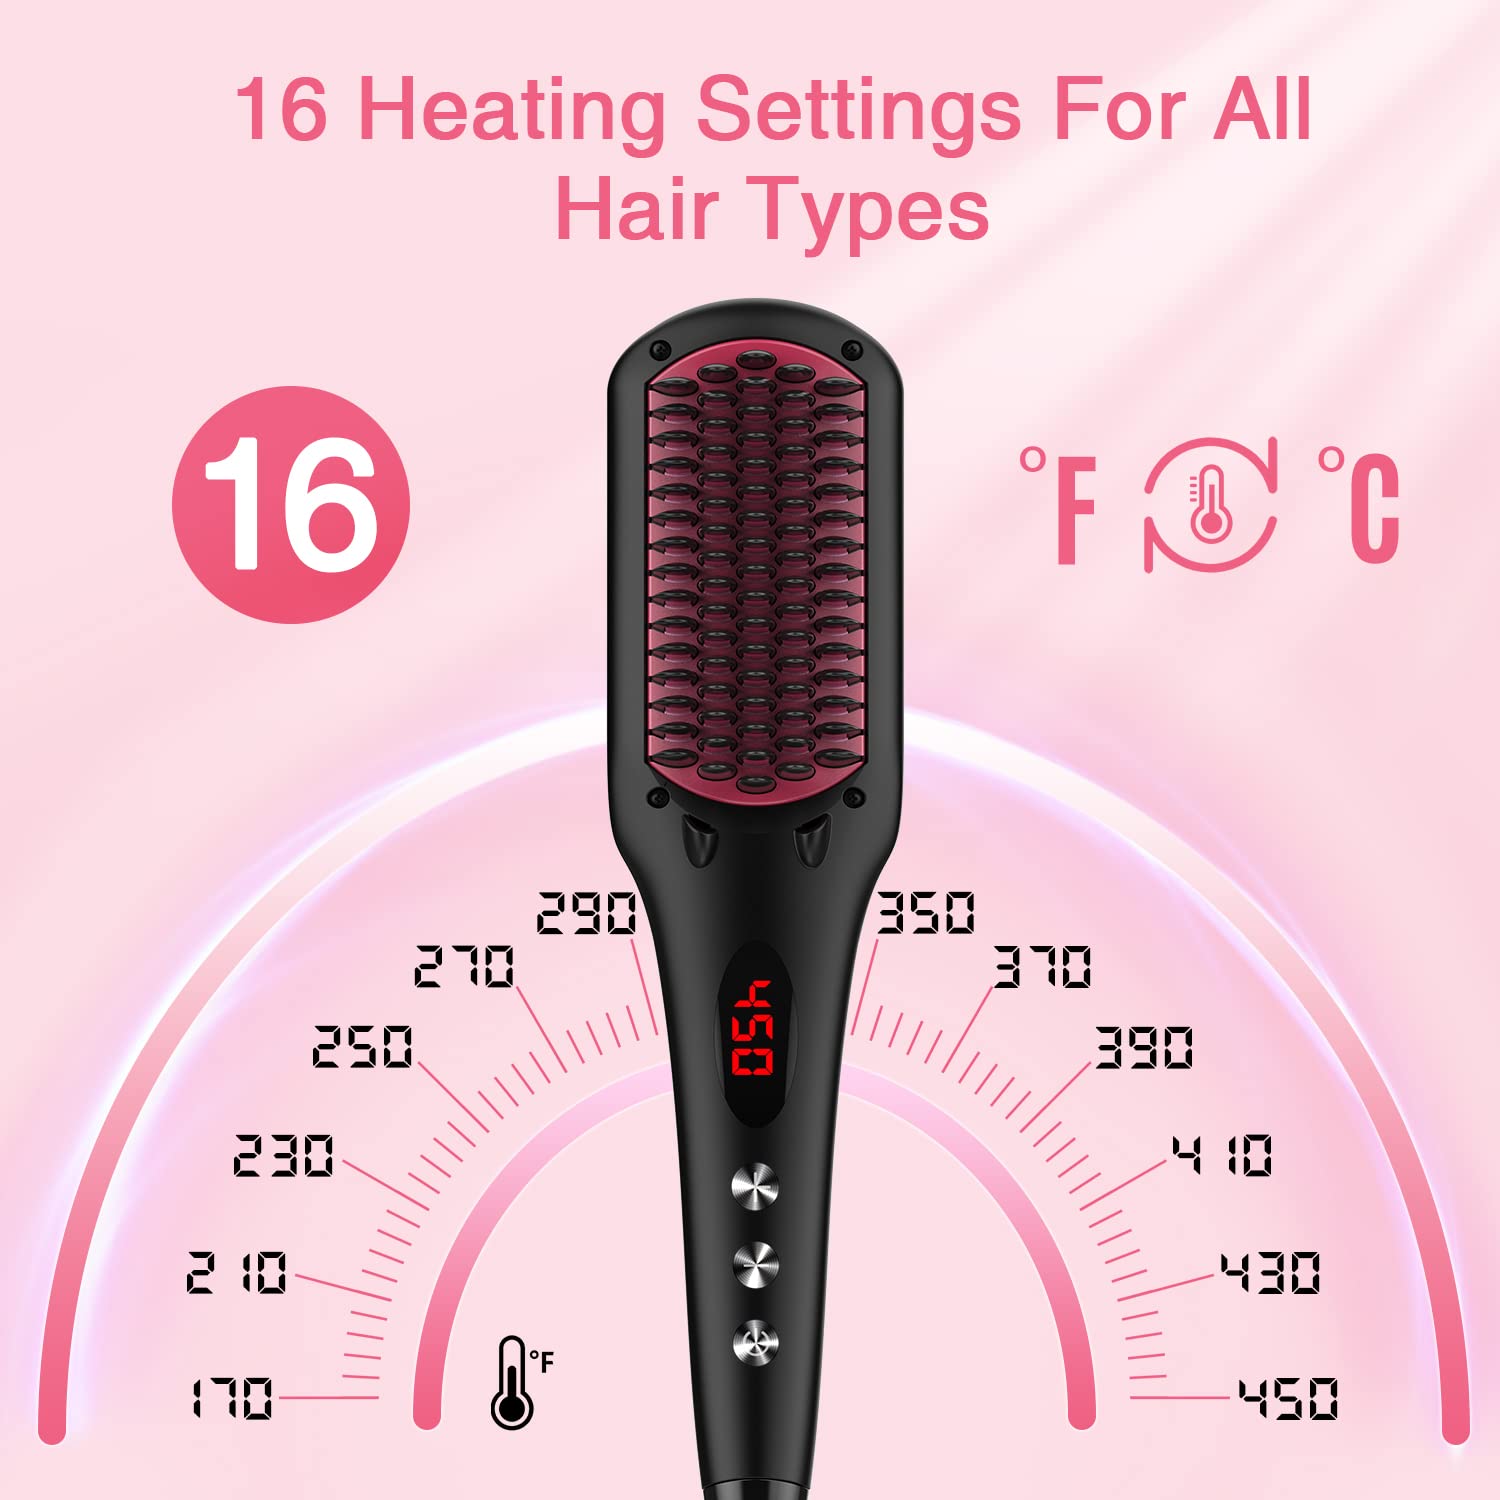 Enhanced Ceramic Hair Straightener Brush by MiroPure, 2-in-1 Ionic Straightening Brush with Anti-Scald Feature, Auto Temperature Lock & Auto-Off Function (Black)